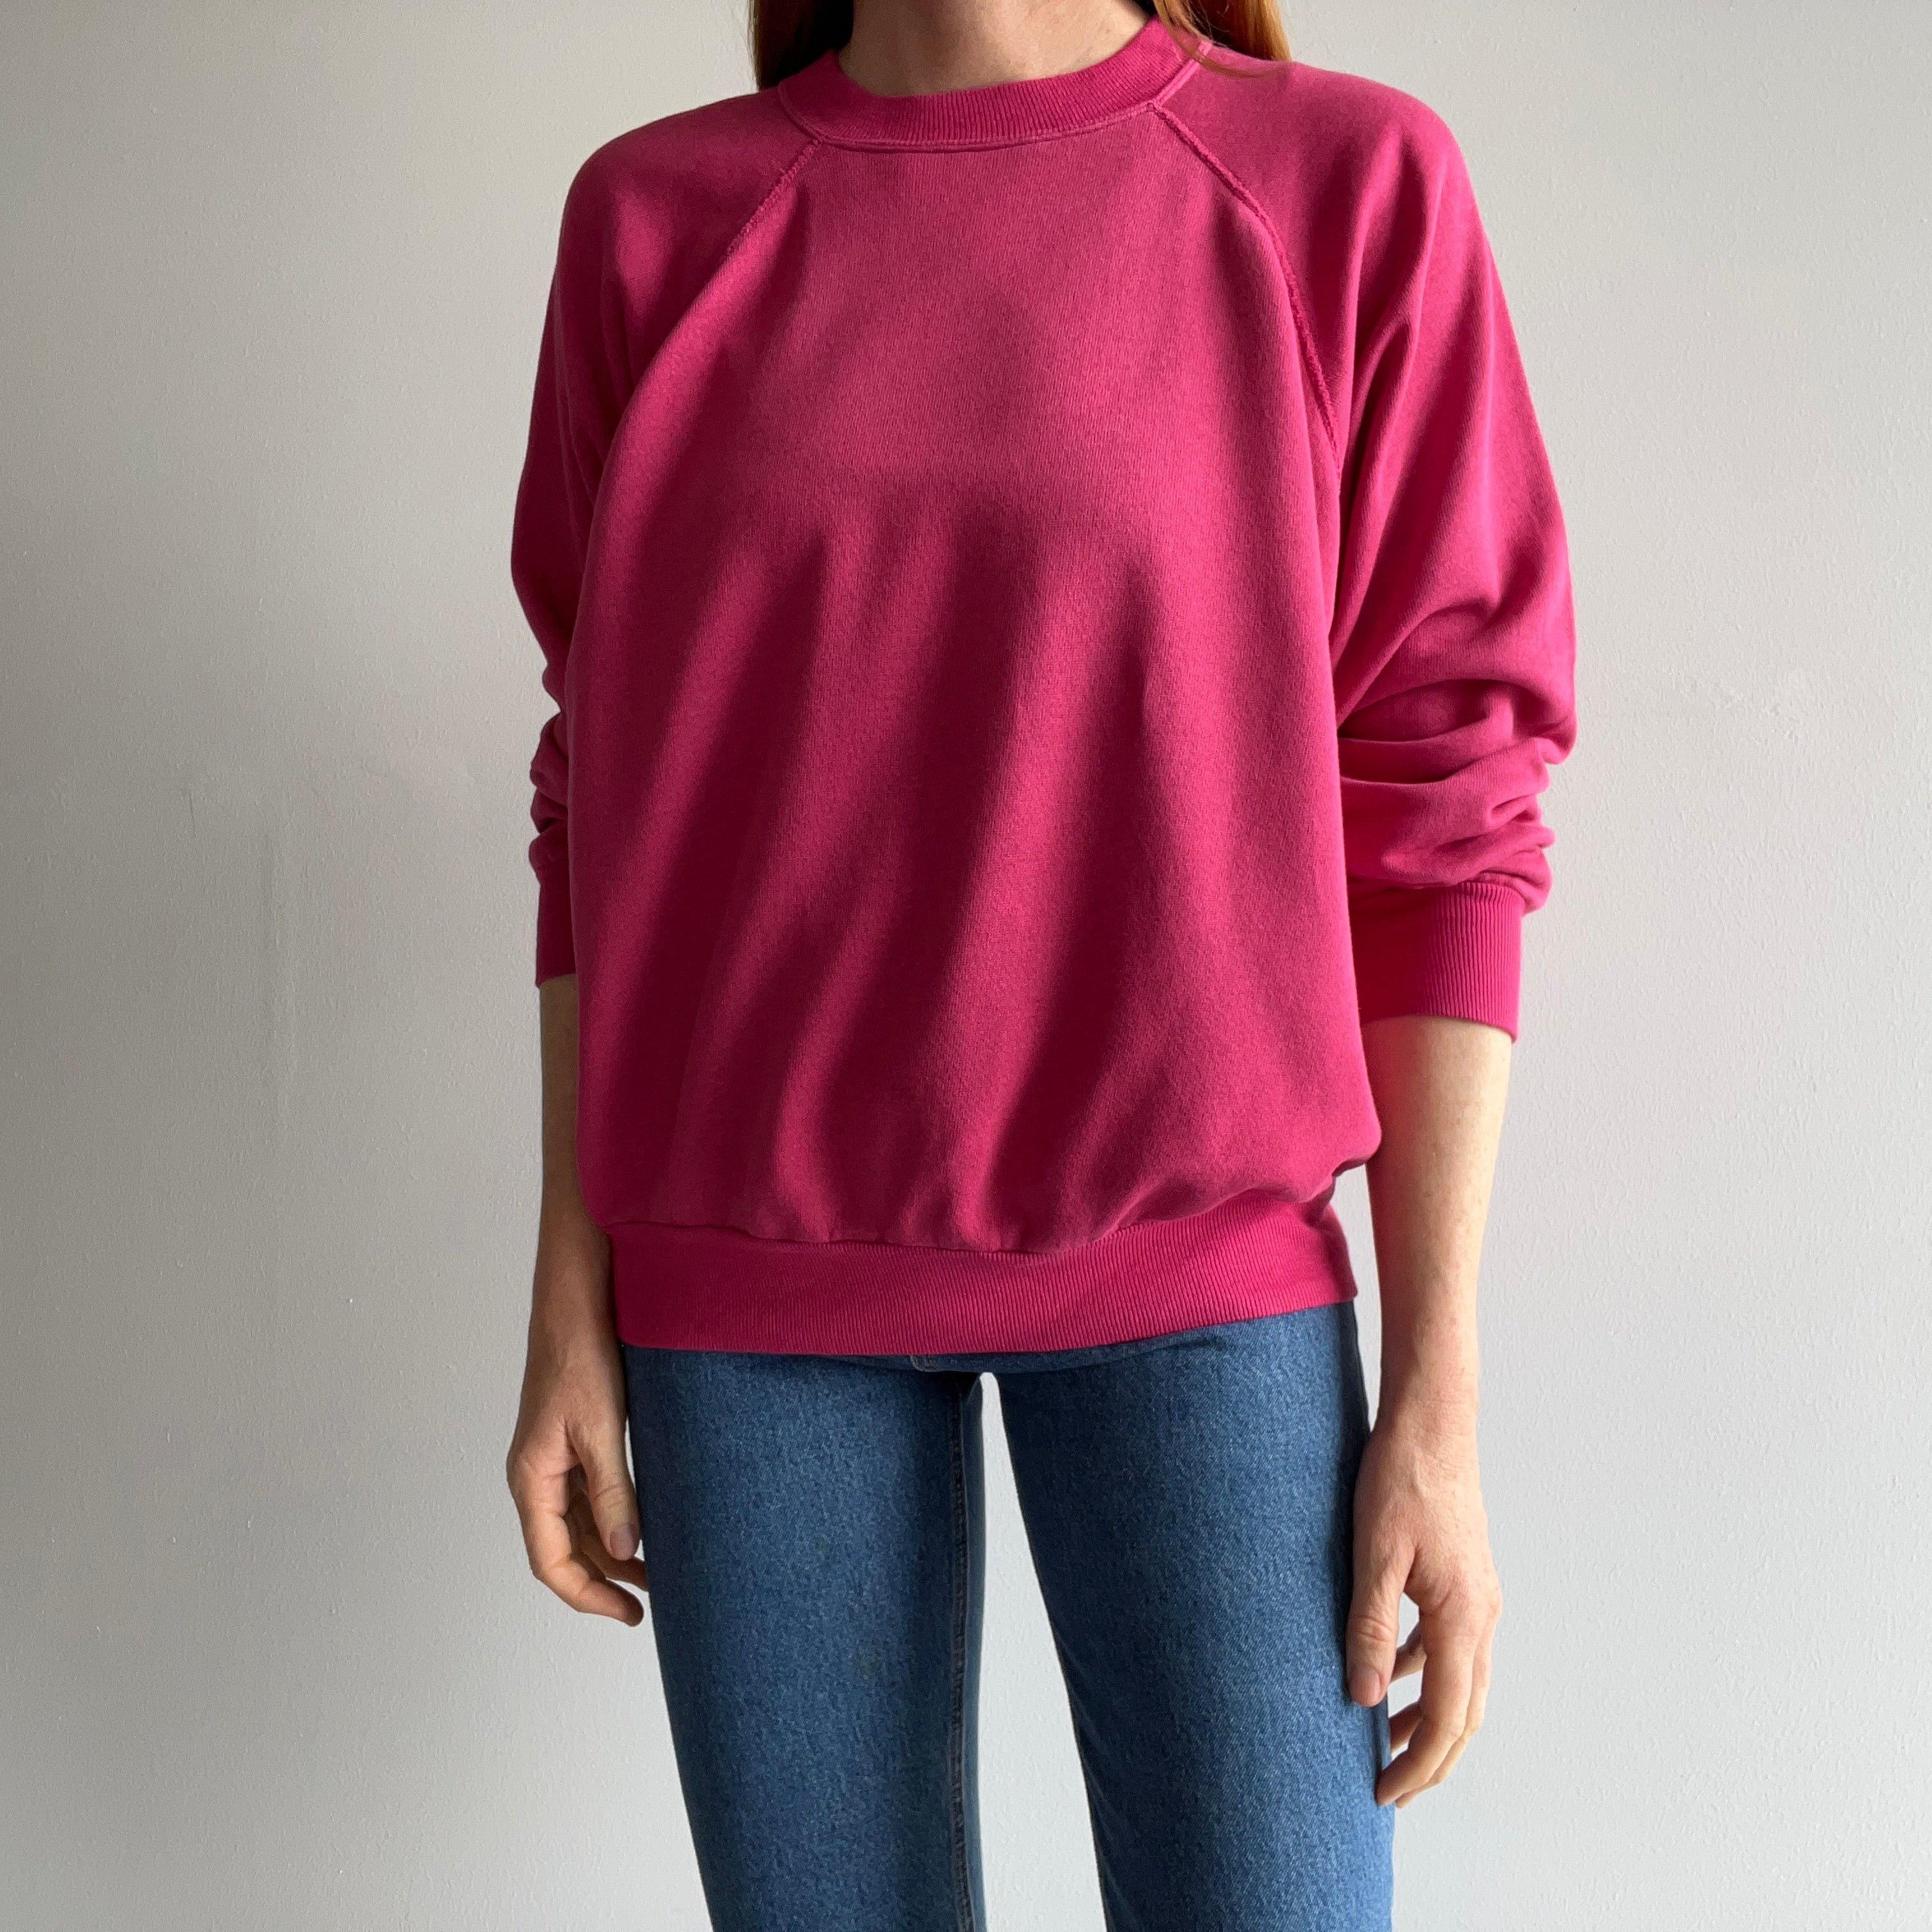 1980s Pink Thinned Out Raglan Sweatshirt